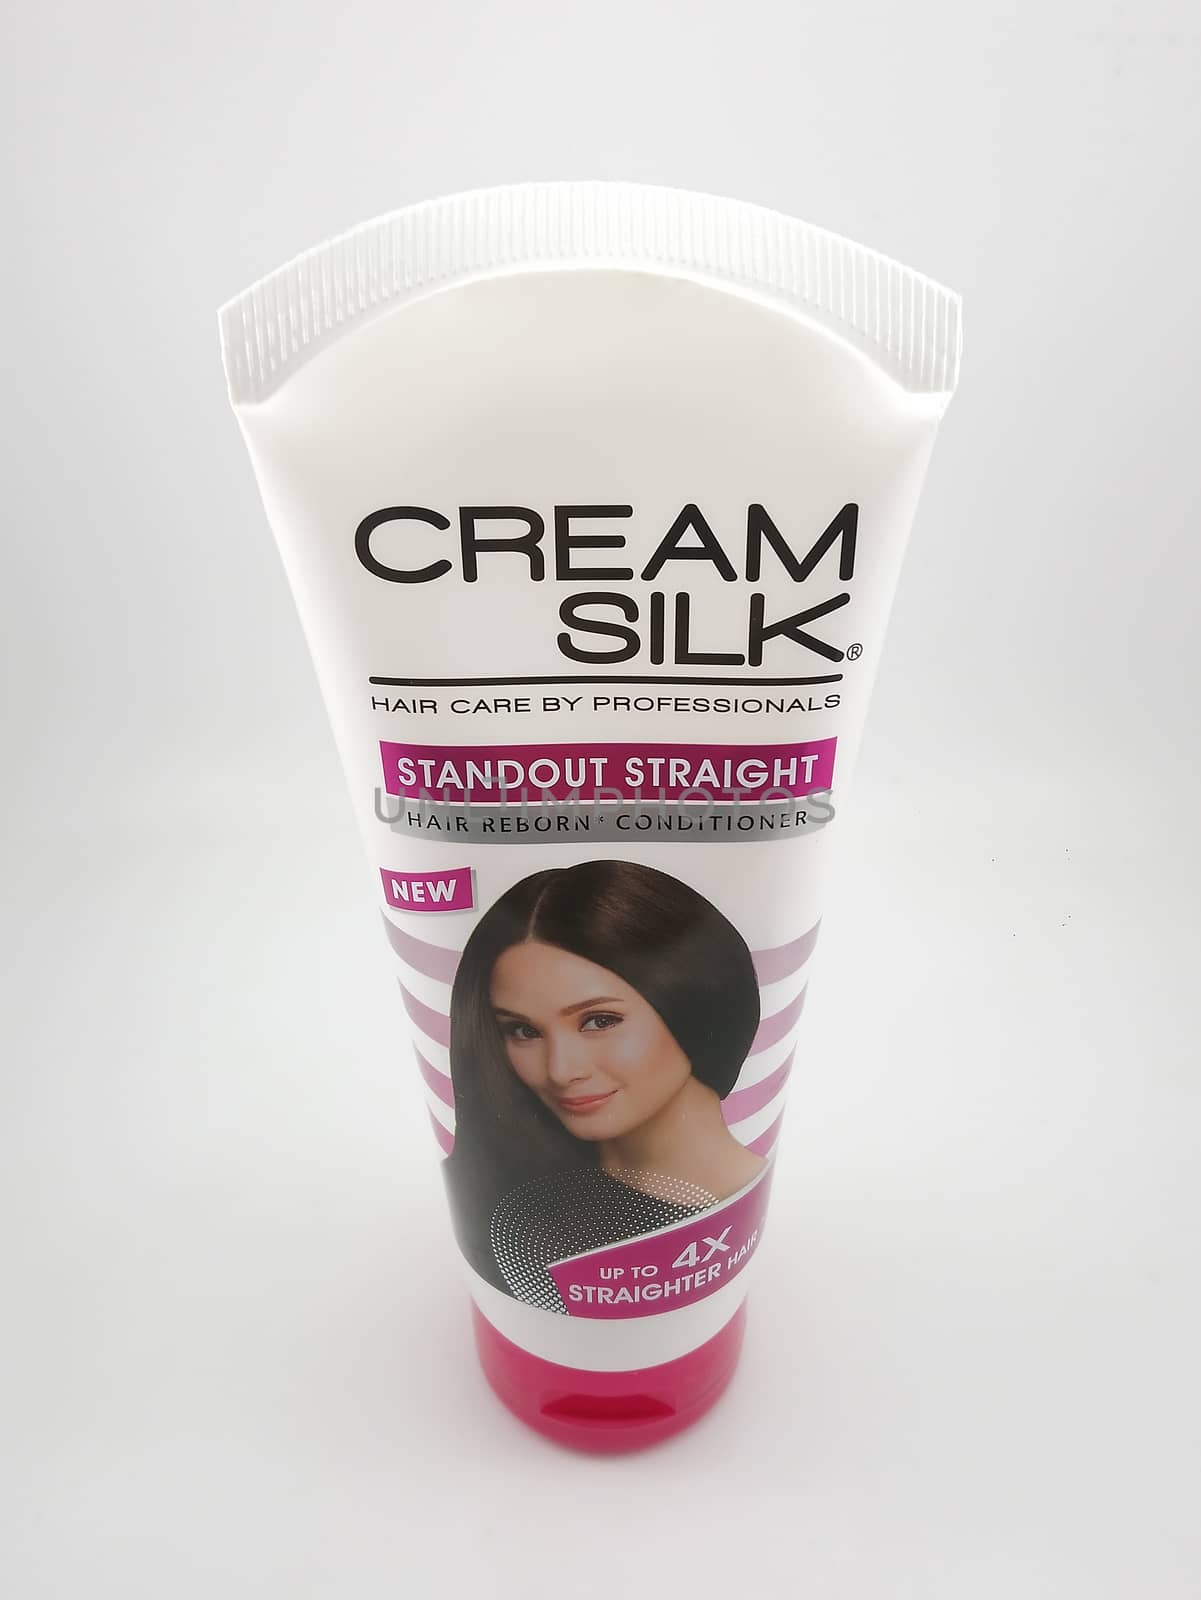 Cream silk standout straight hair conditioner in Manila, Philipp by imwaltersy